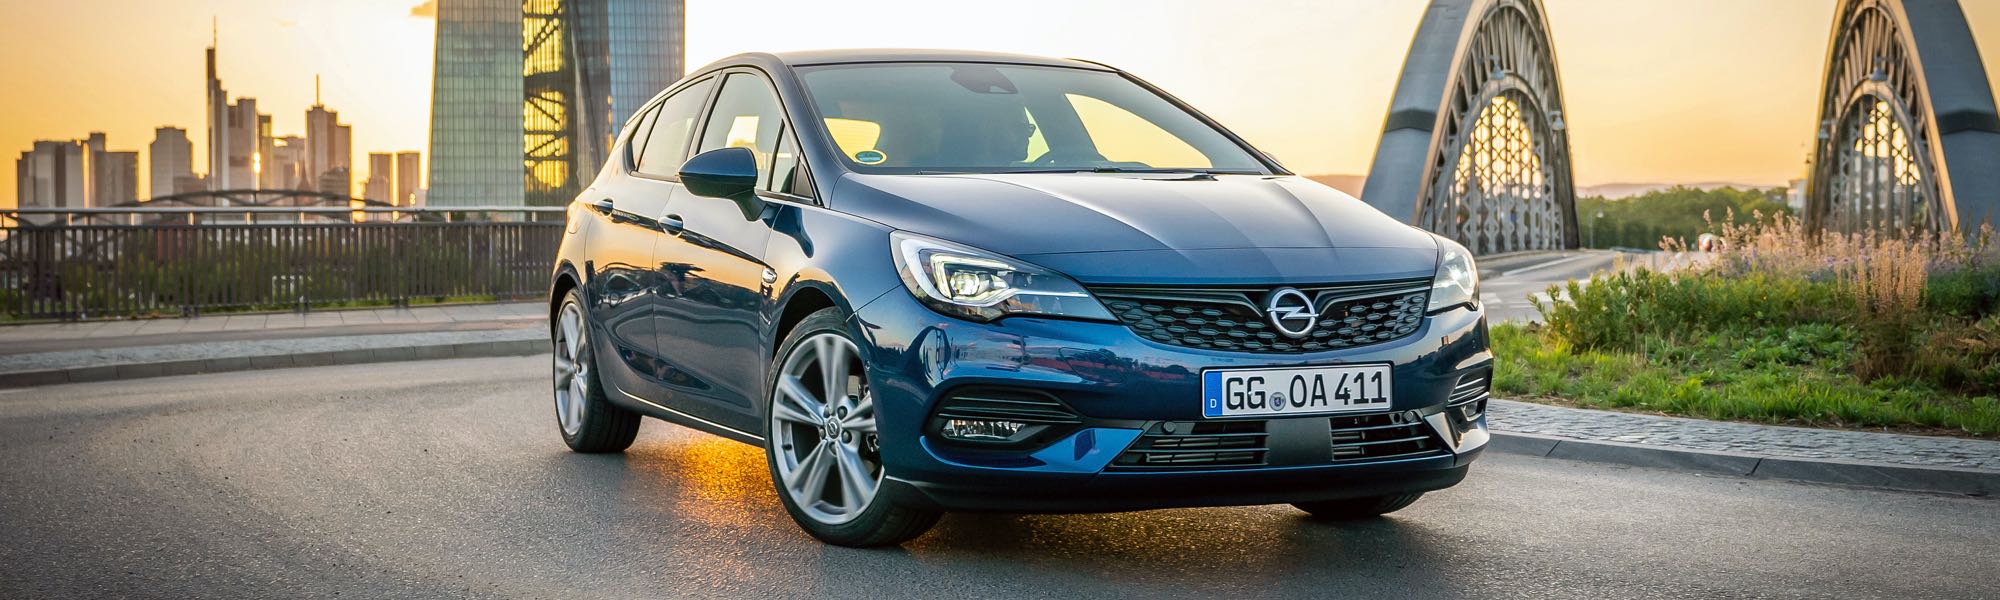 Altmann Autoland Haan Opel Neuwagen Presseubersciht Presseberichte Uber Den Opel Astra 5 Turer